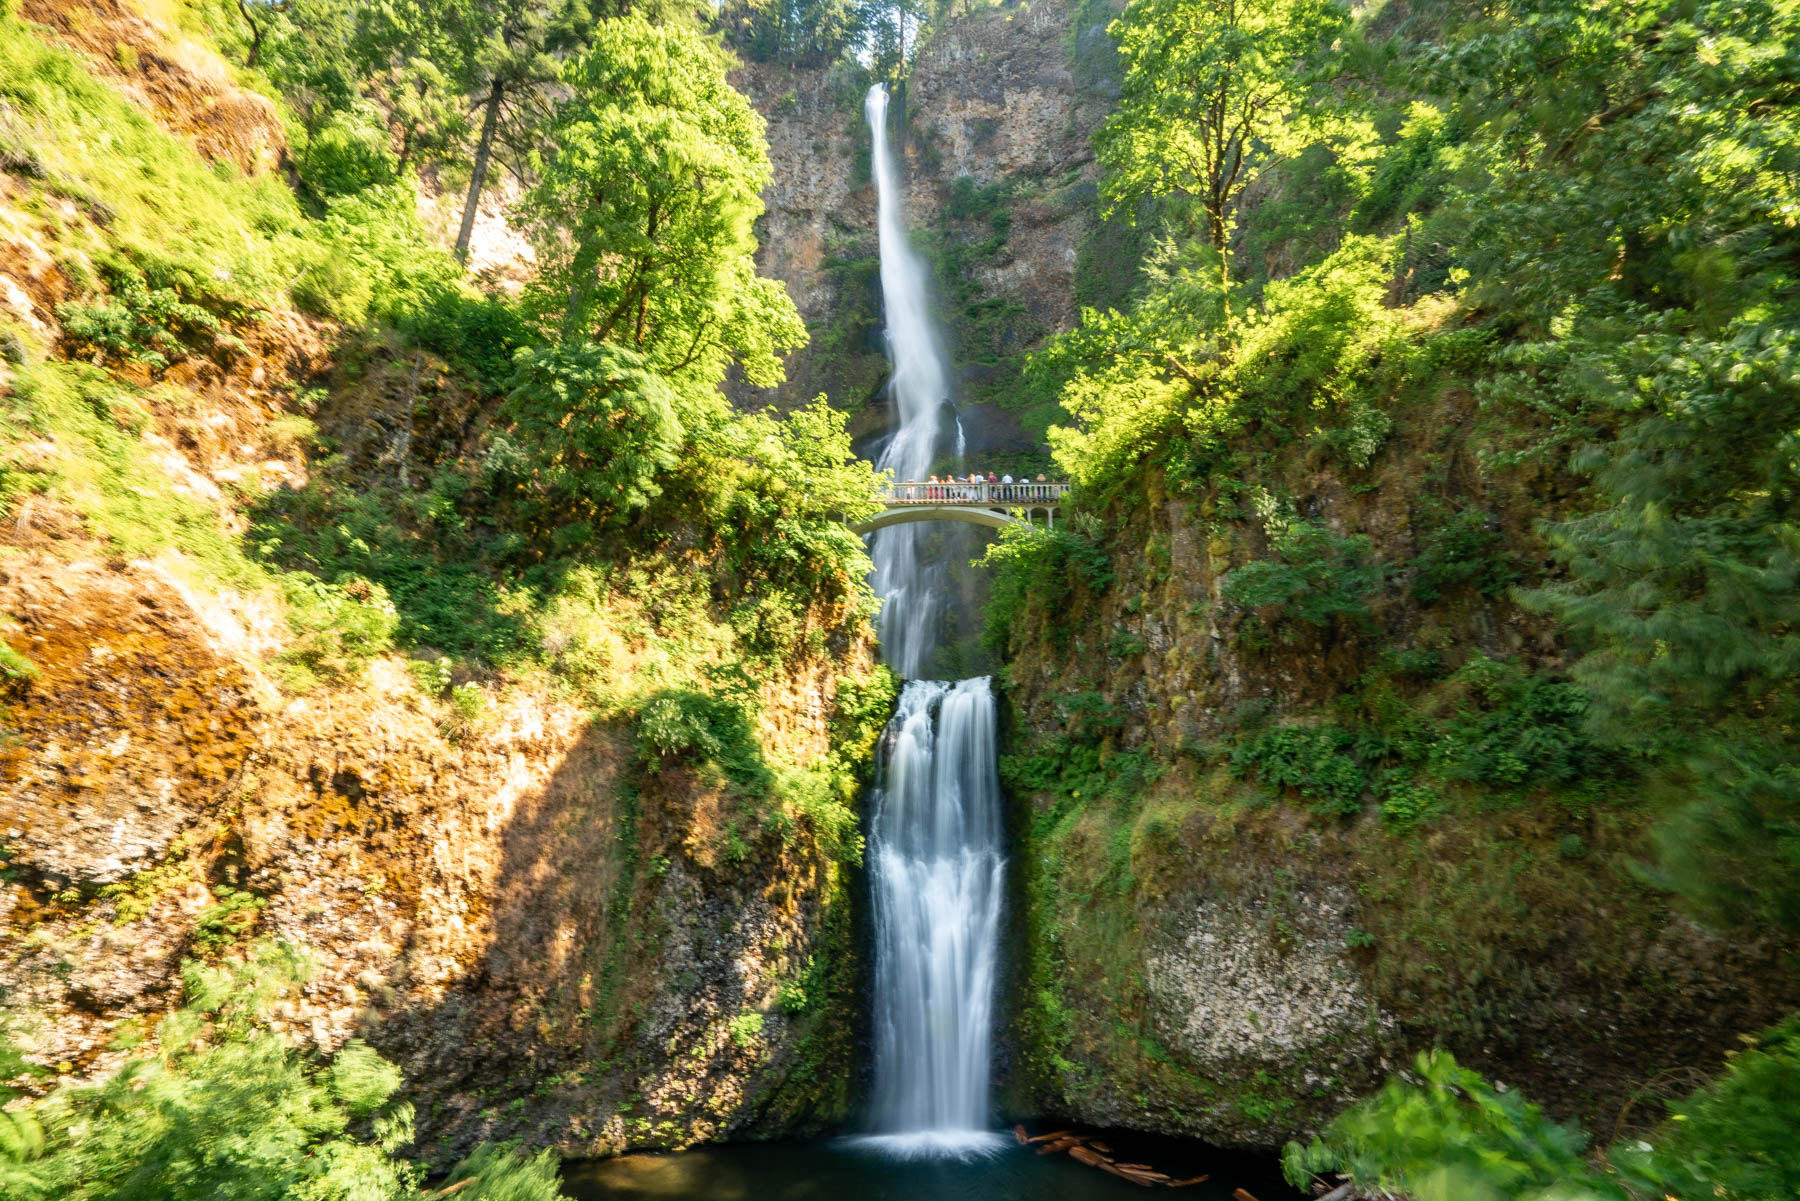 Multnomah Falls Oregon
Most beautiful waterfalls in Oregon